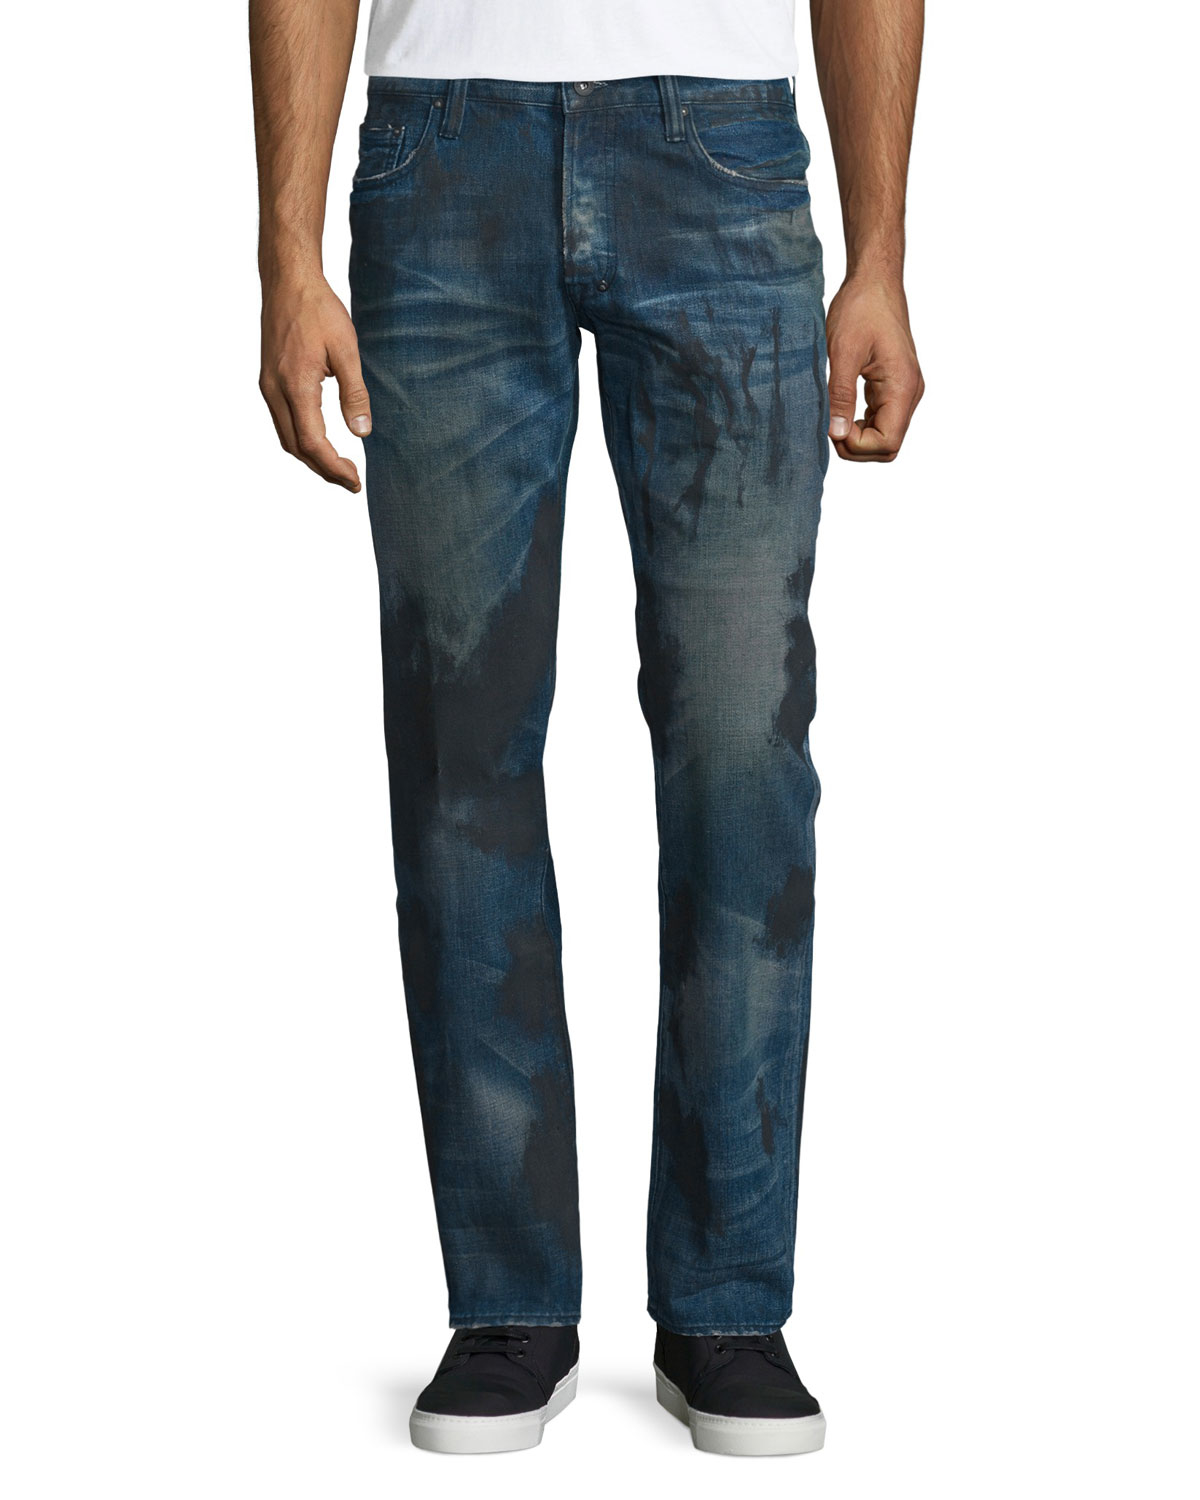 Lyst - Prps Barracuda Dirty-wash Denim Jeans in Blue for Men